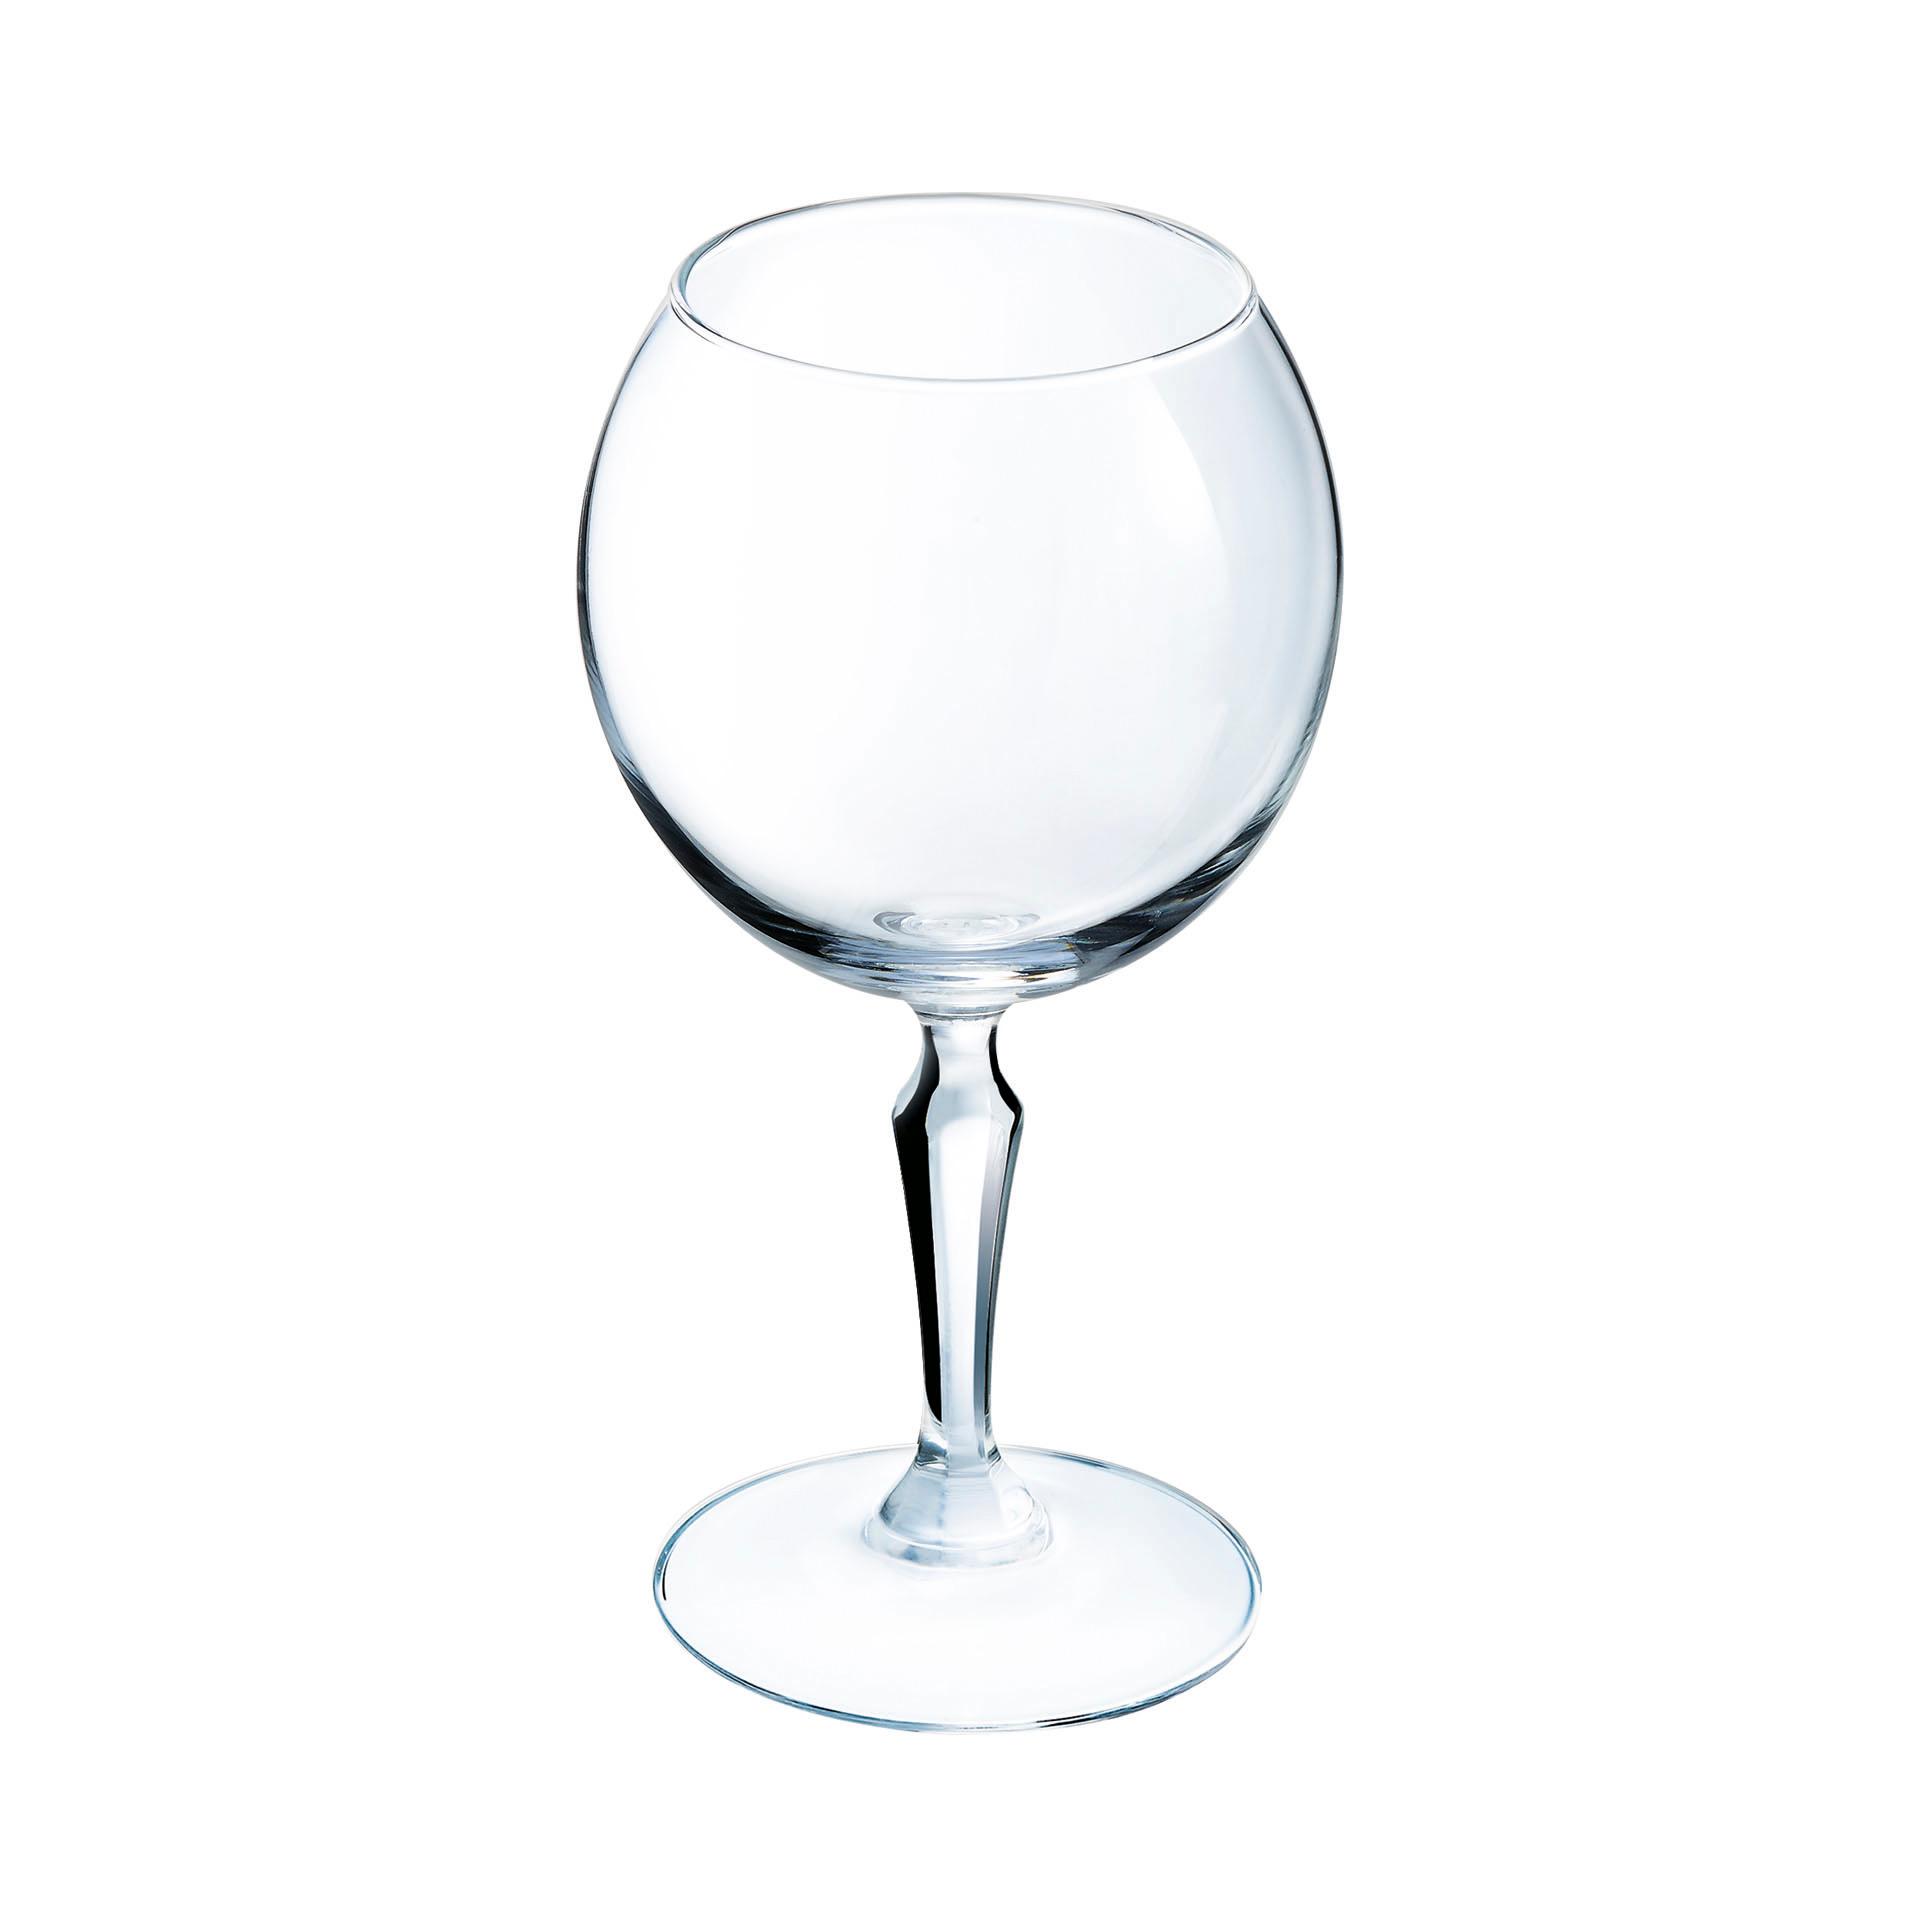 Monti gin glass, 580ml